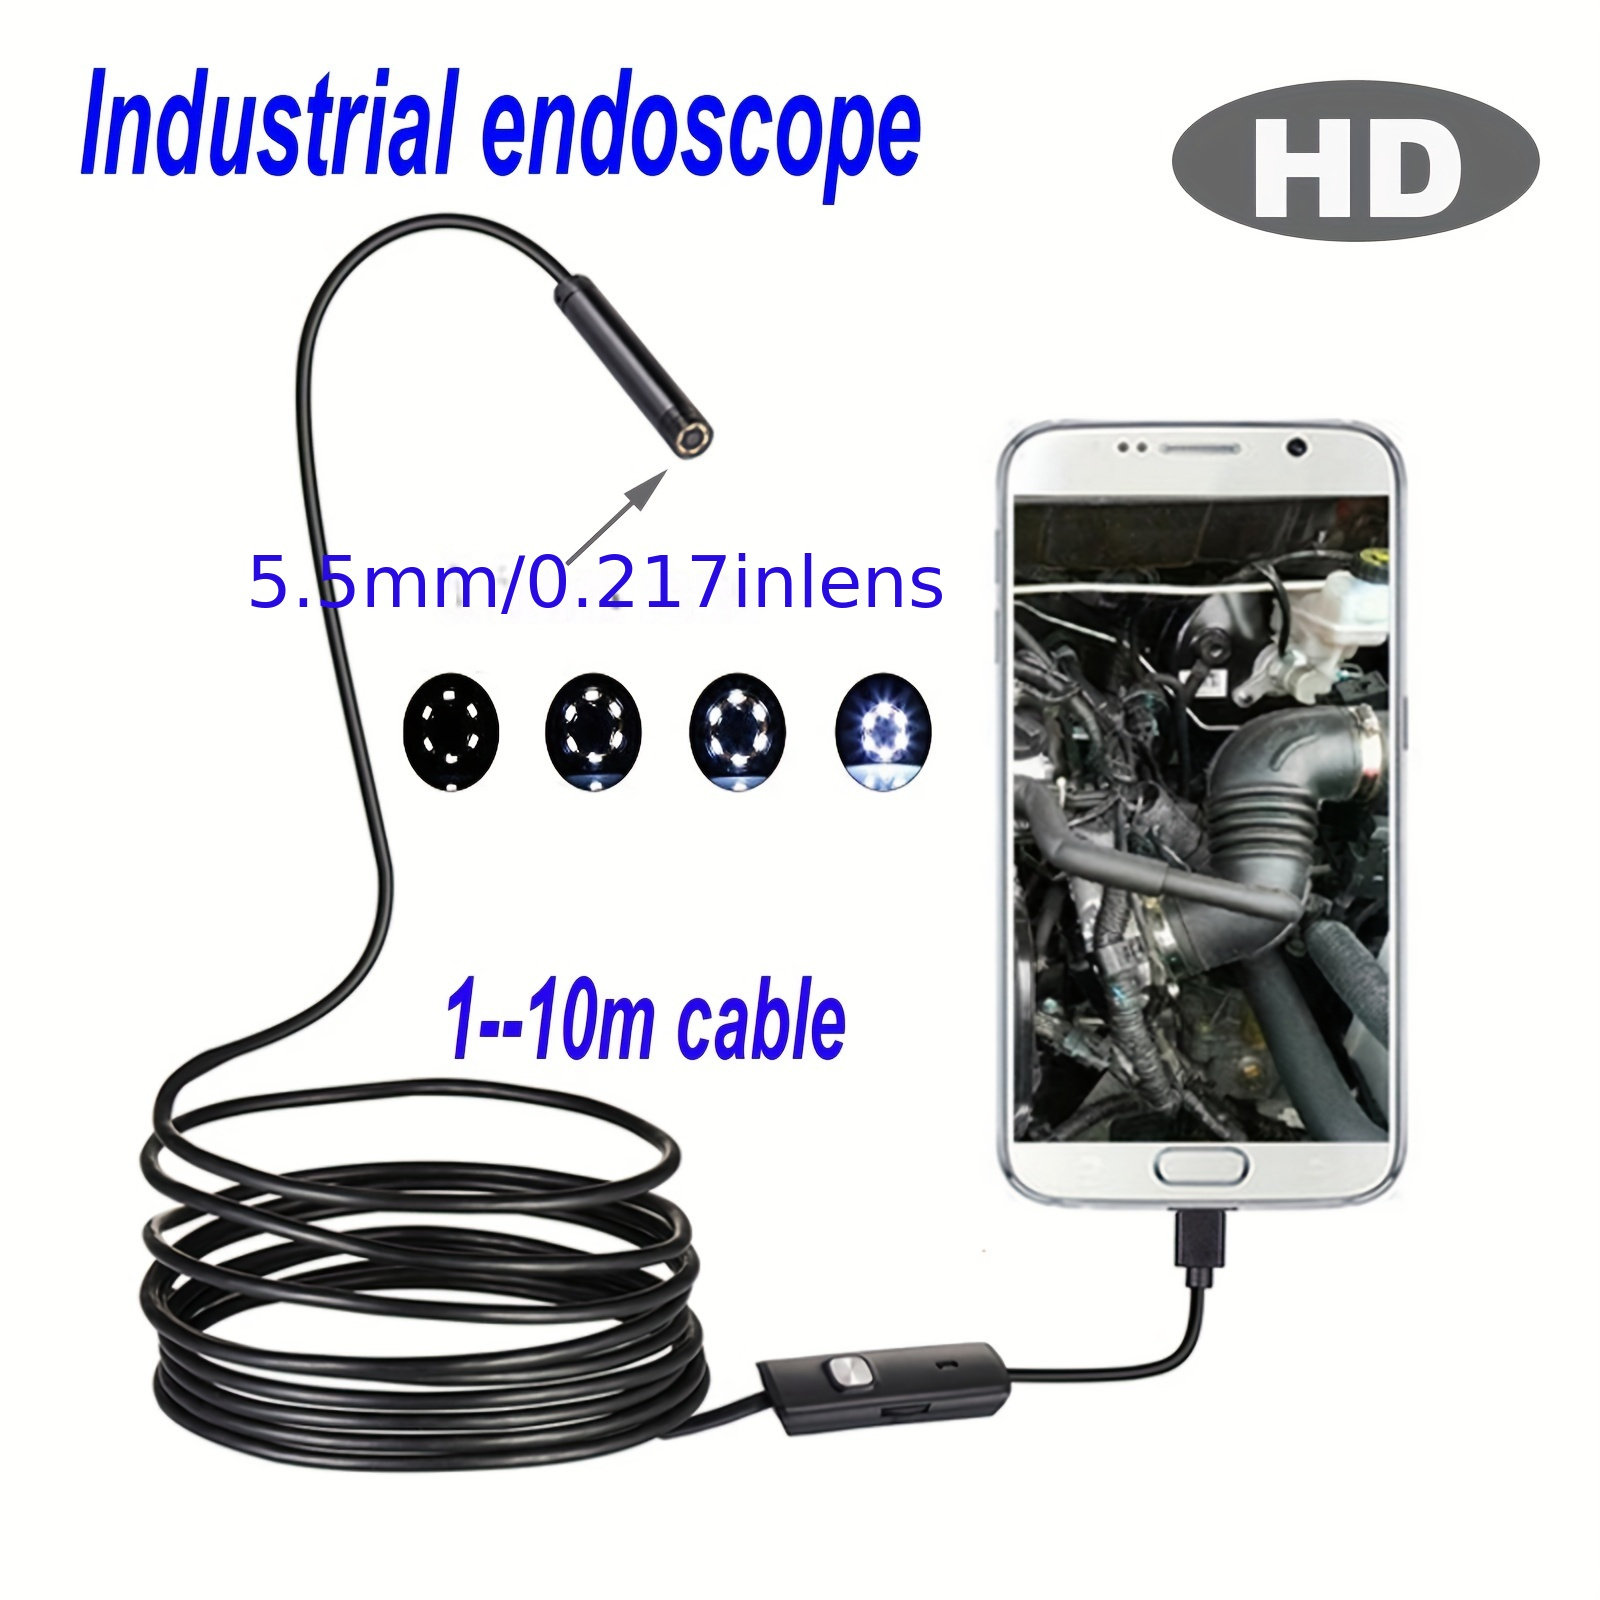 Waterproof Usb Endoscope Borescope Snake Inspection Camera Mobile